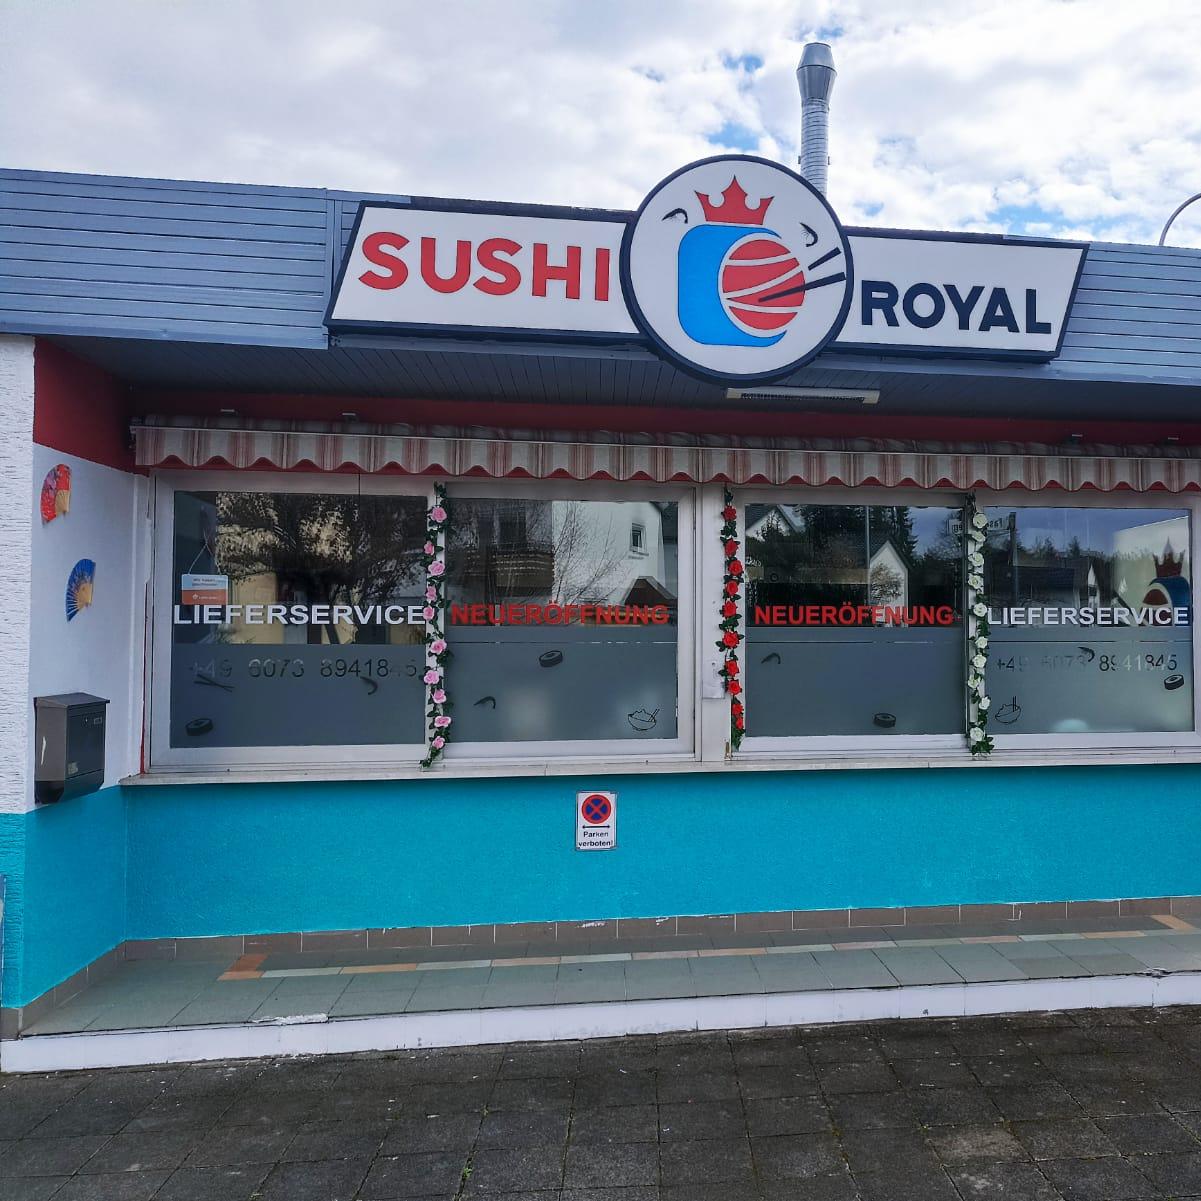 Restaurant "Sushi Royal  060738941845" in Babenhausen